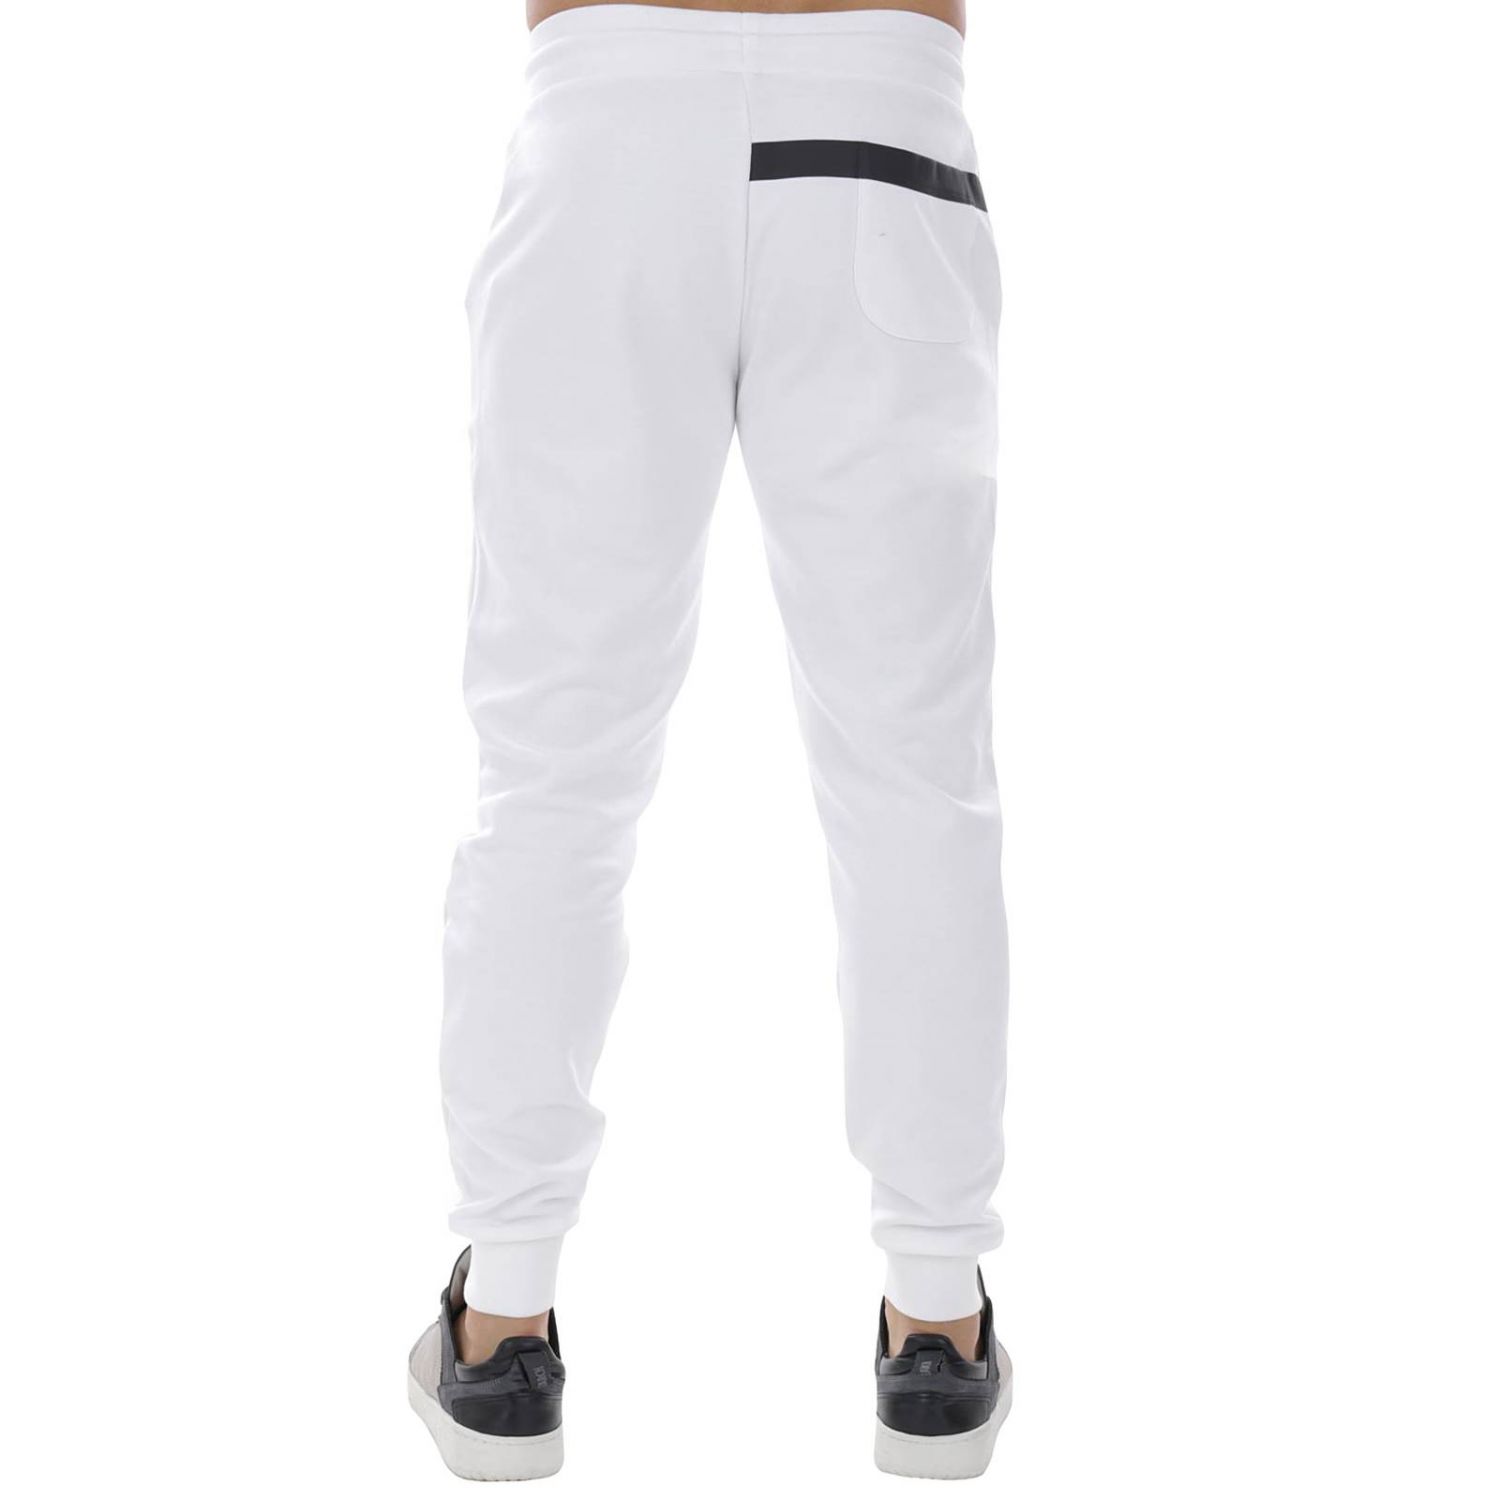 Colmar Outlet: Pants men - White | Pants Colmar 8251 7SG GIGLIO.COM